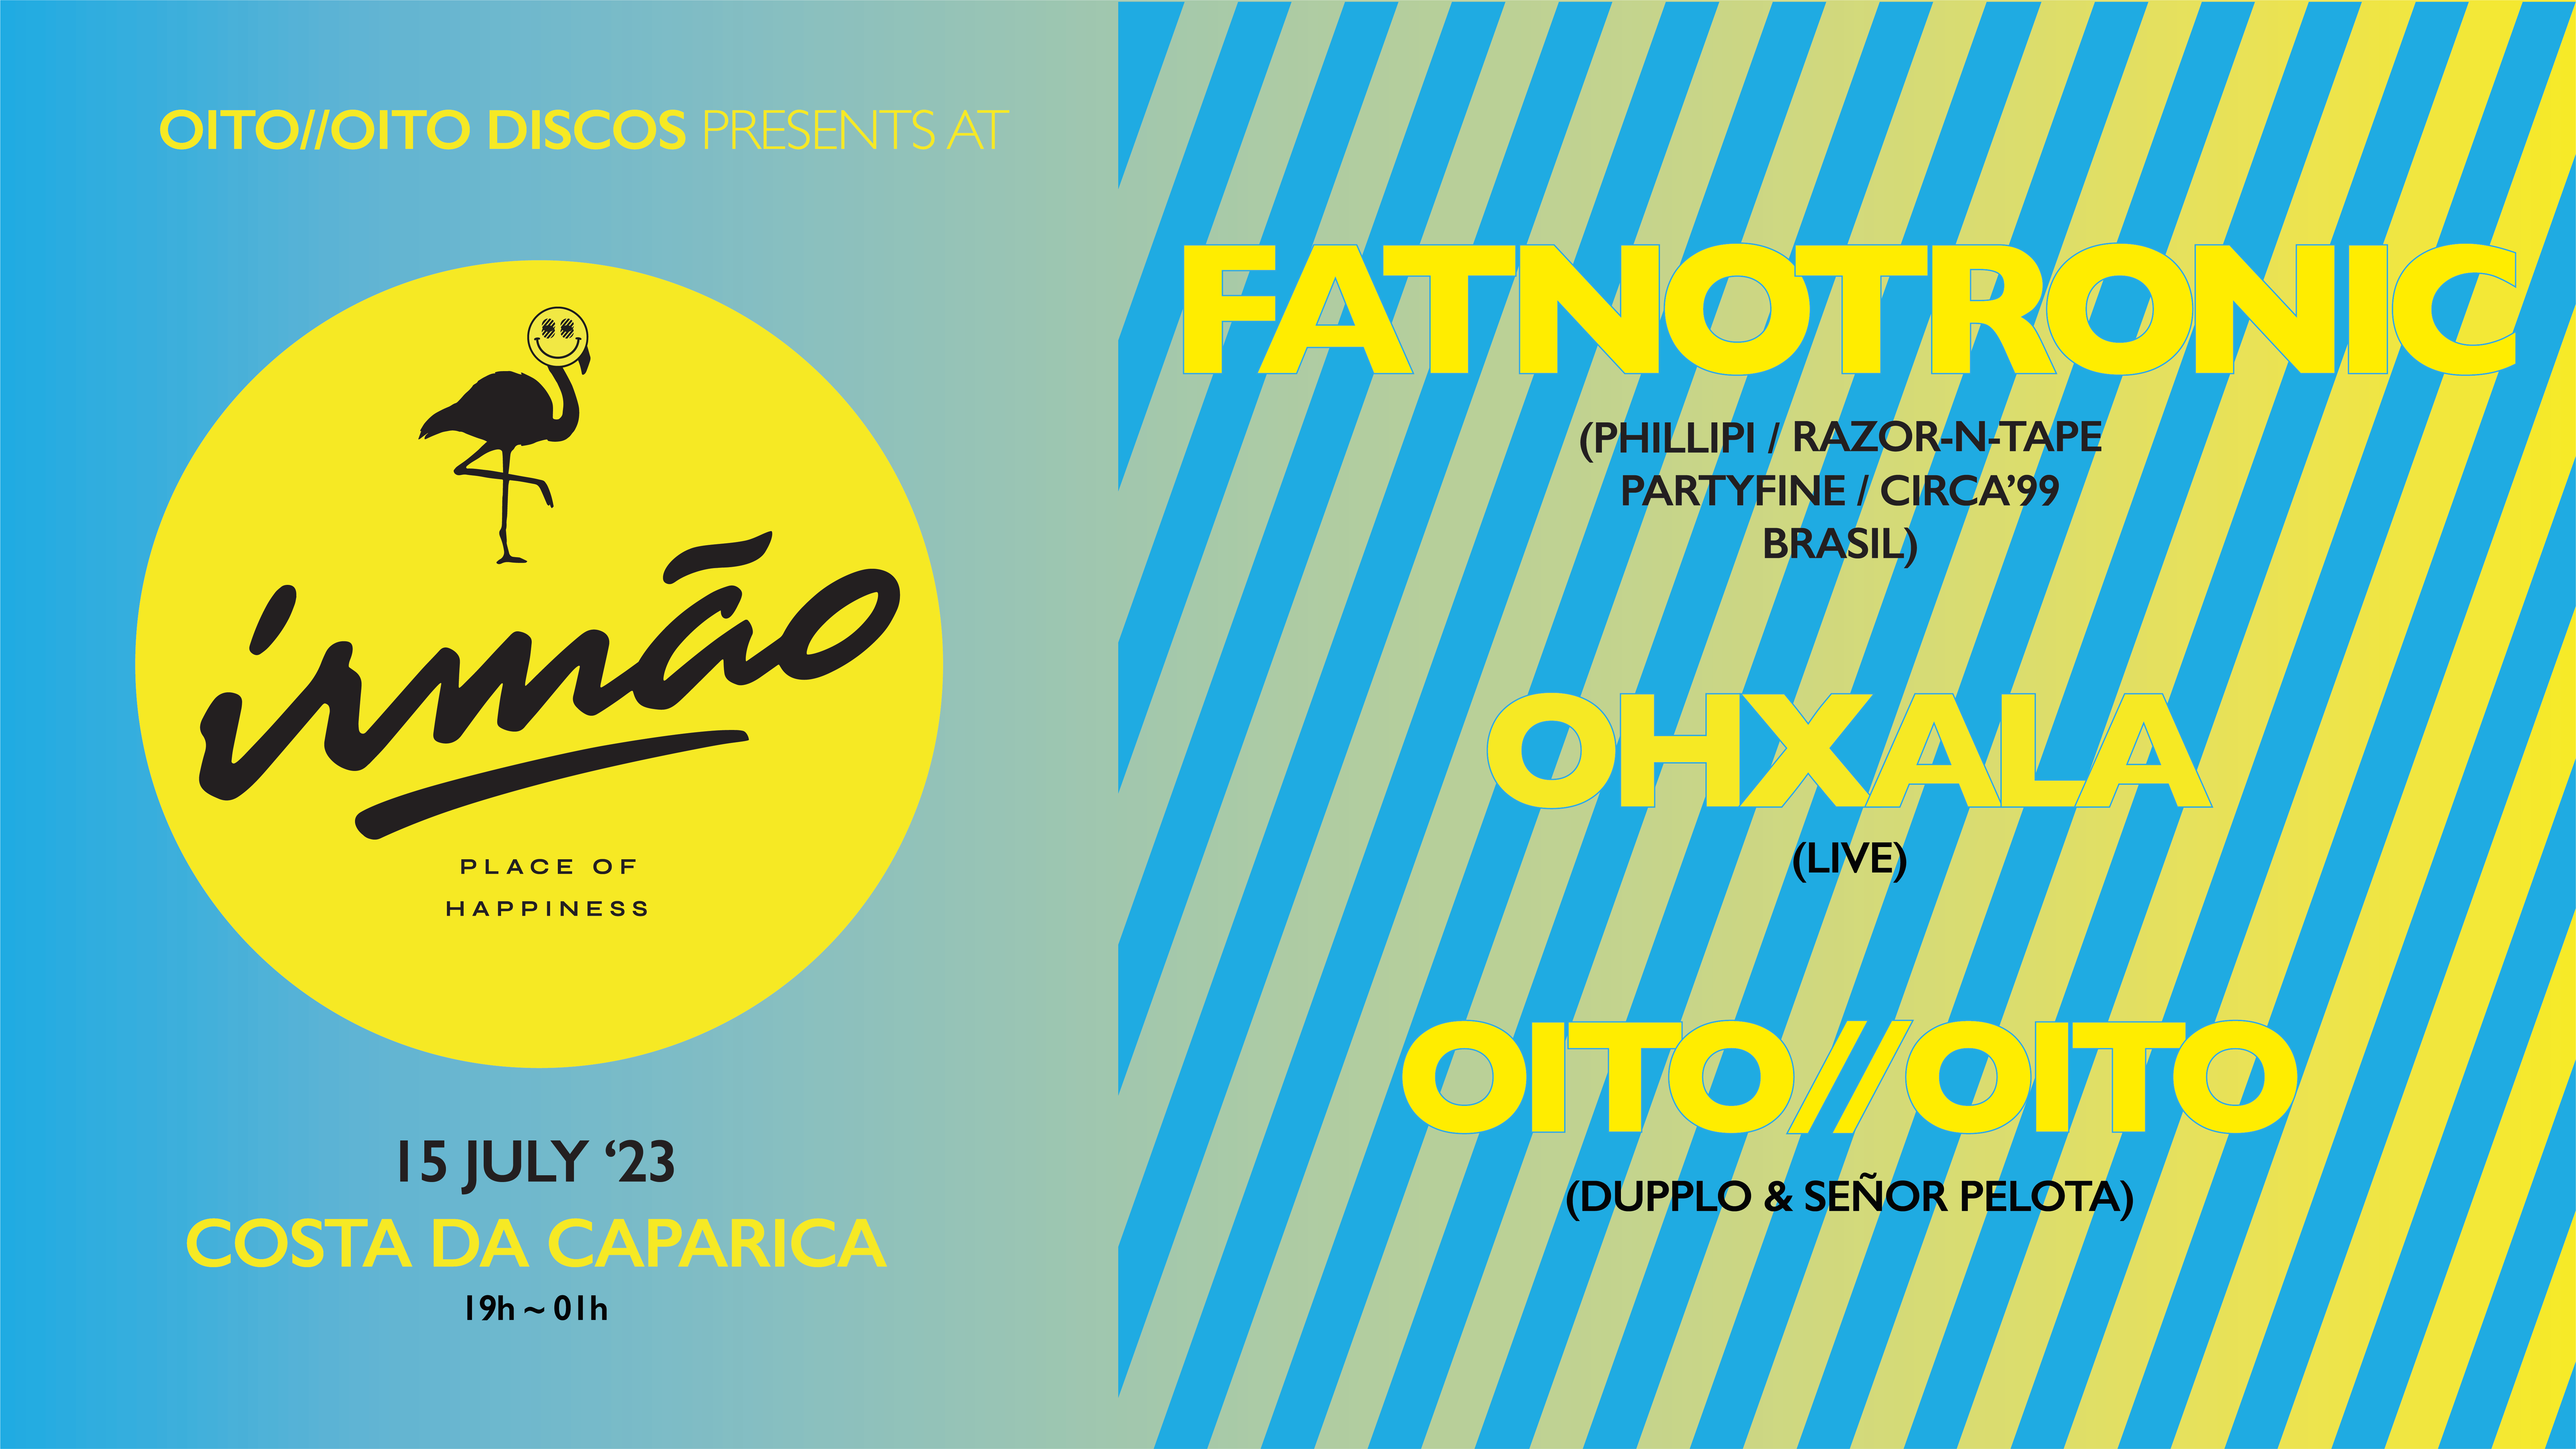 OITO//OITO Discos presents @Irmão: FATNOTRONIC OHXALA OITO//OITO - フライヤー表